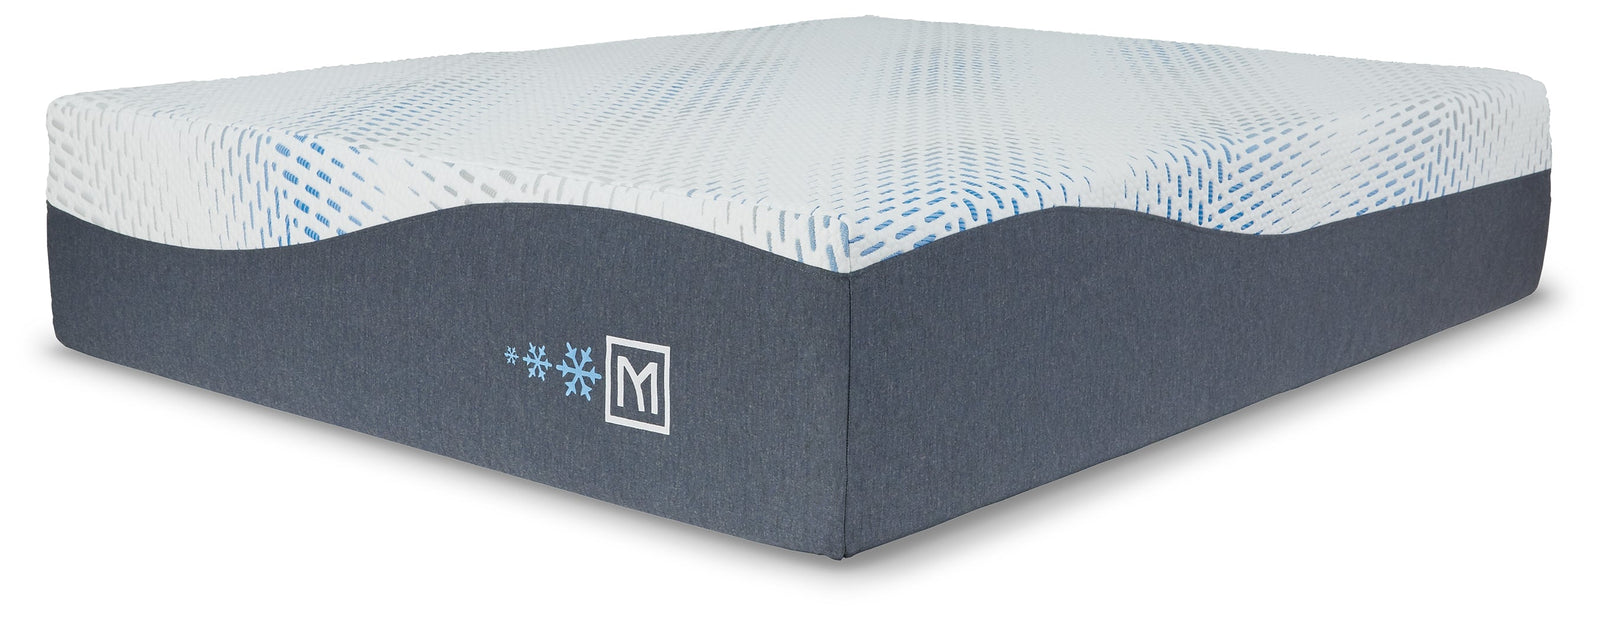 Millennium Luxury Gel Latex And Memory Foam White Twin Xl Mattress